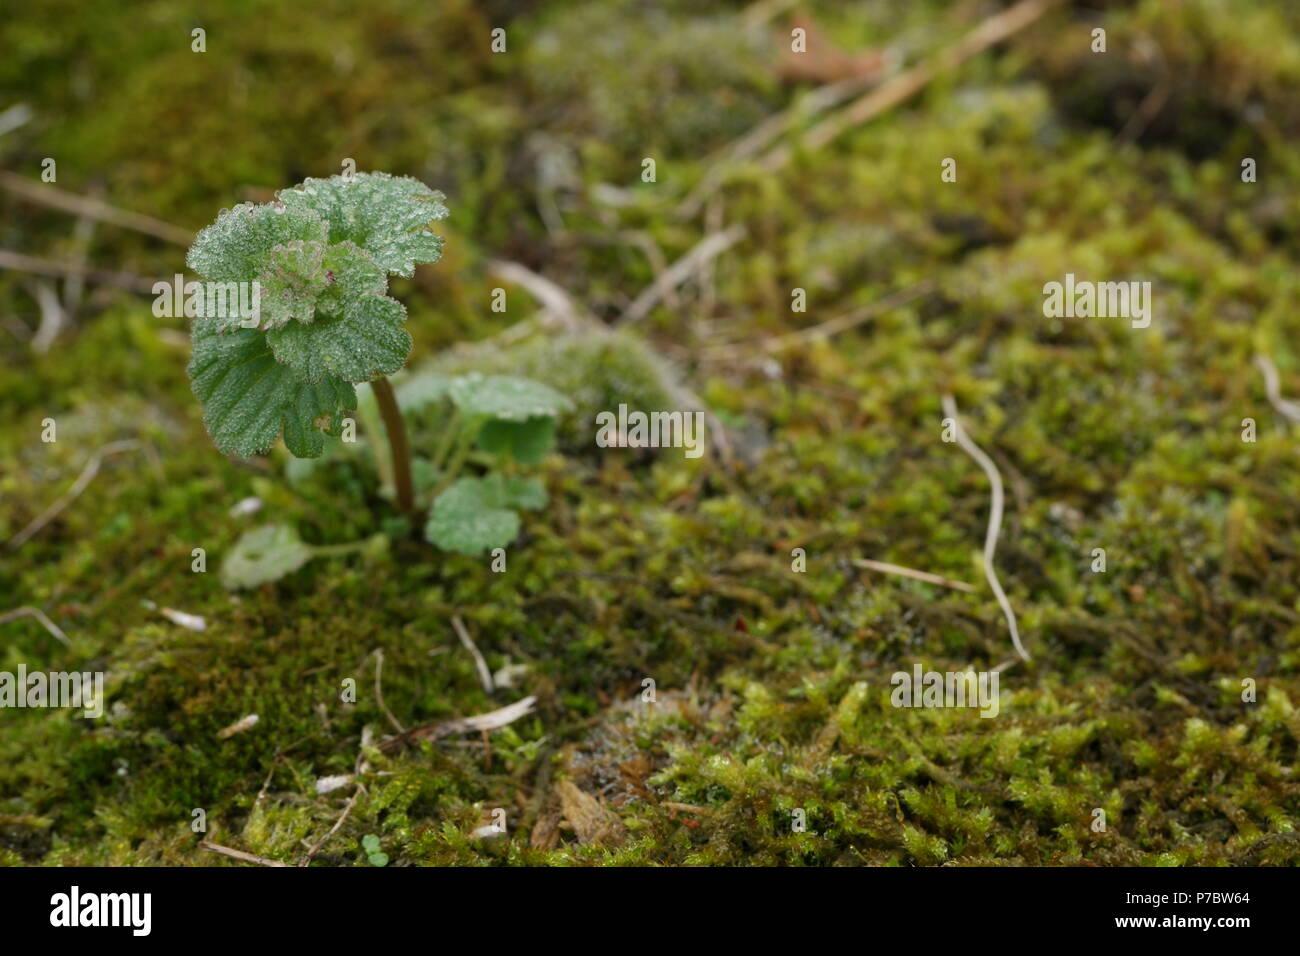 Lamium amplexicaule (Stengelumfassende Taubnessel) (henbit dead-nettle) (lamier amplexicaule) Stock Photo